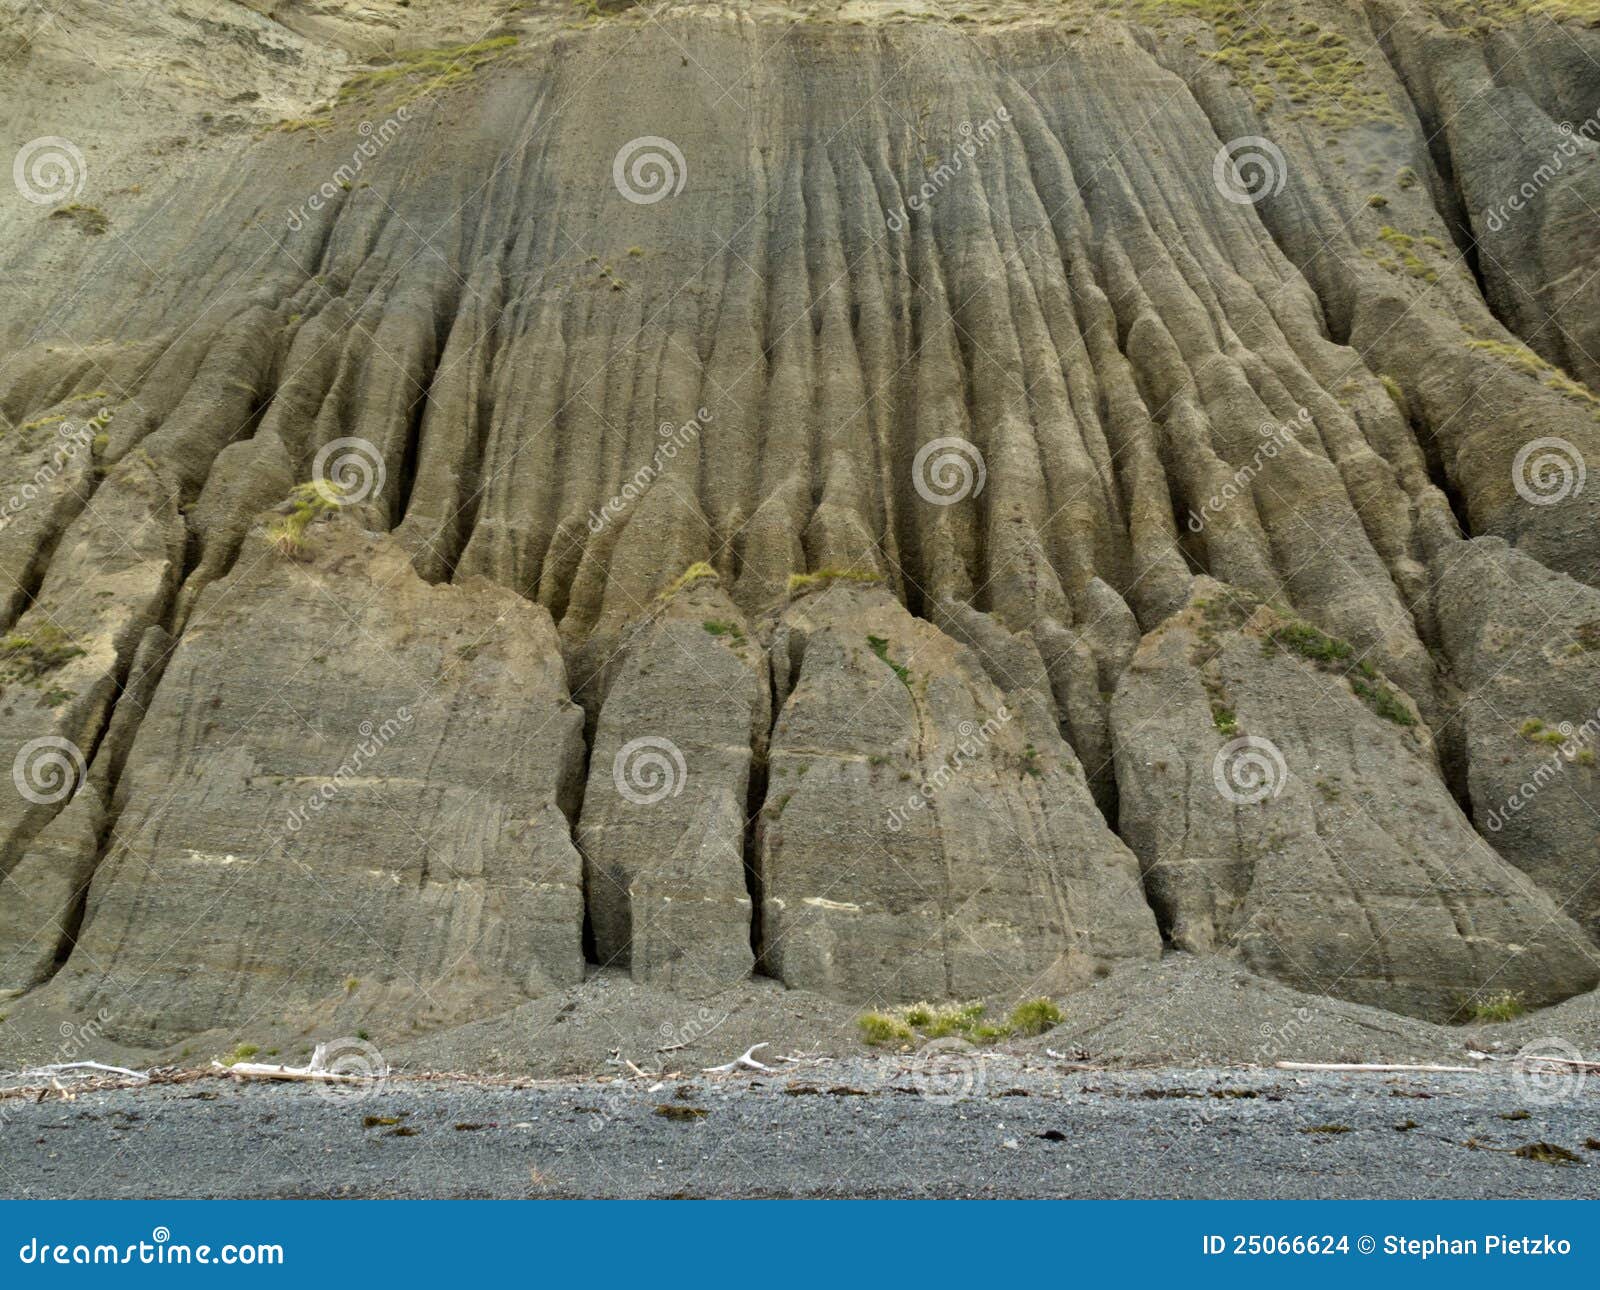 badland erosion of soft conglomerate sediment